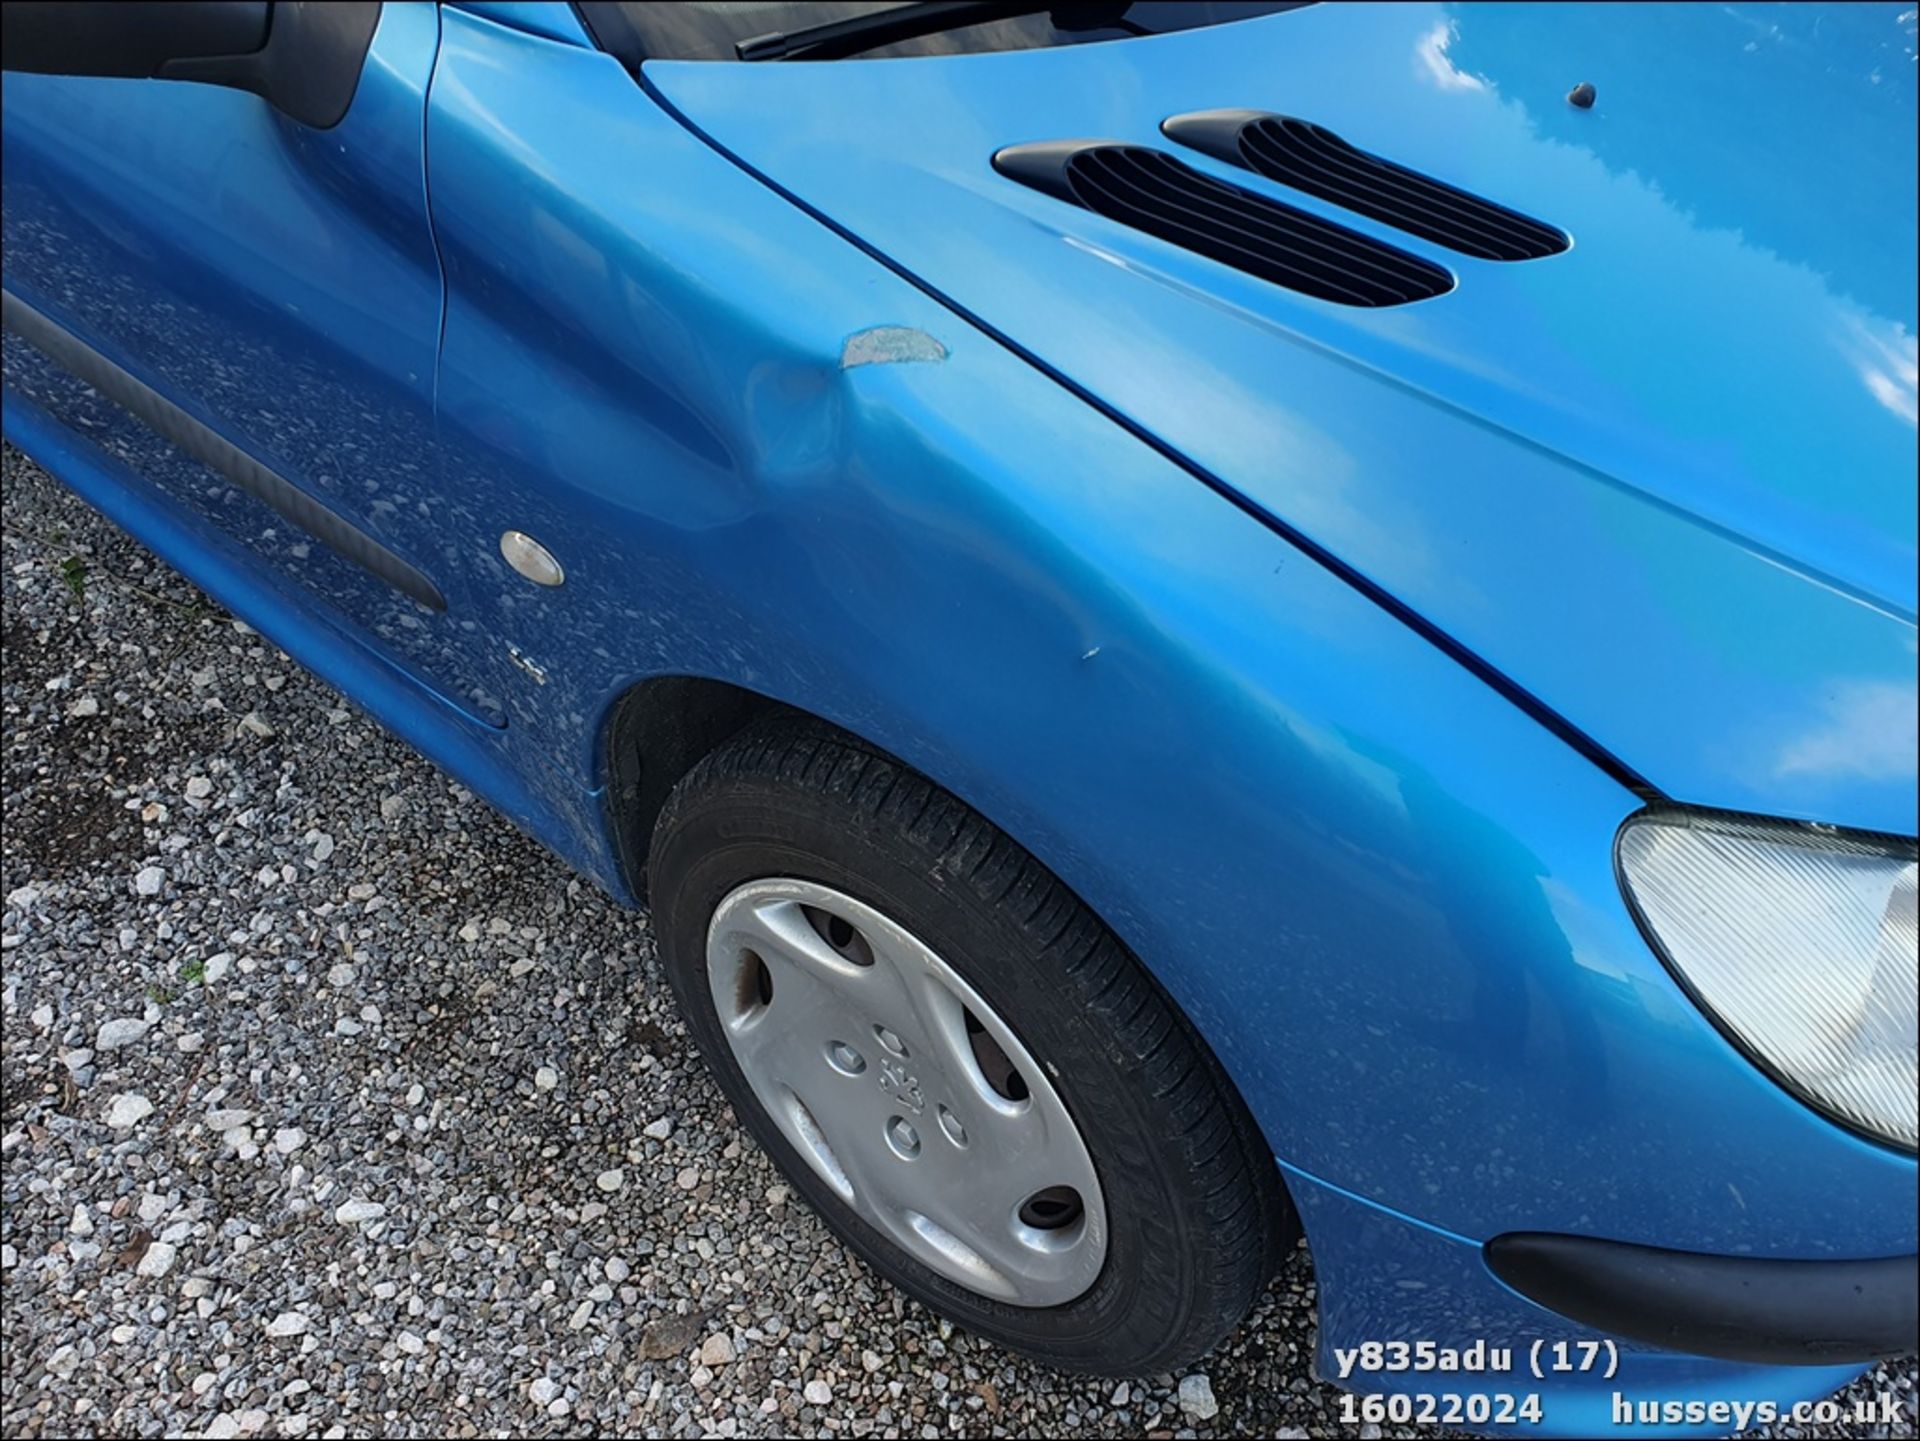 2001 PEUGEOT 206 LX AUTO - 1360cc 3dr Hatchback (Blue, 85k) - Image 18 of 22